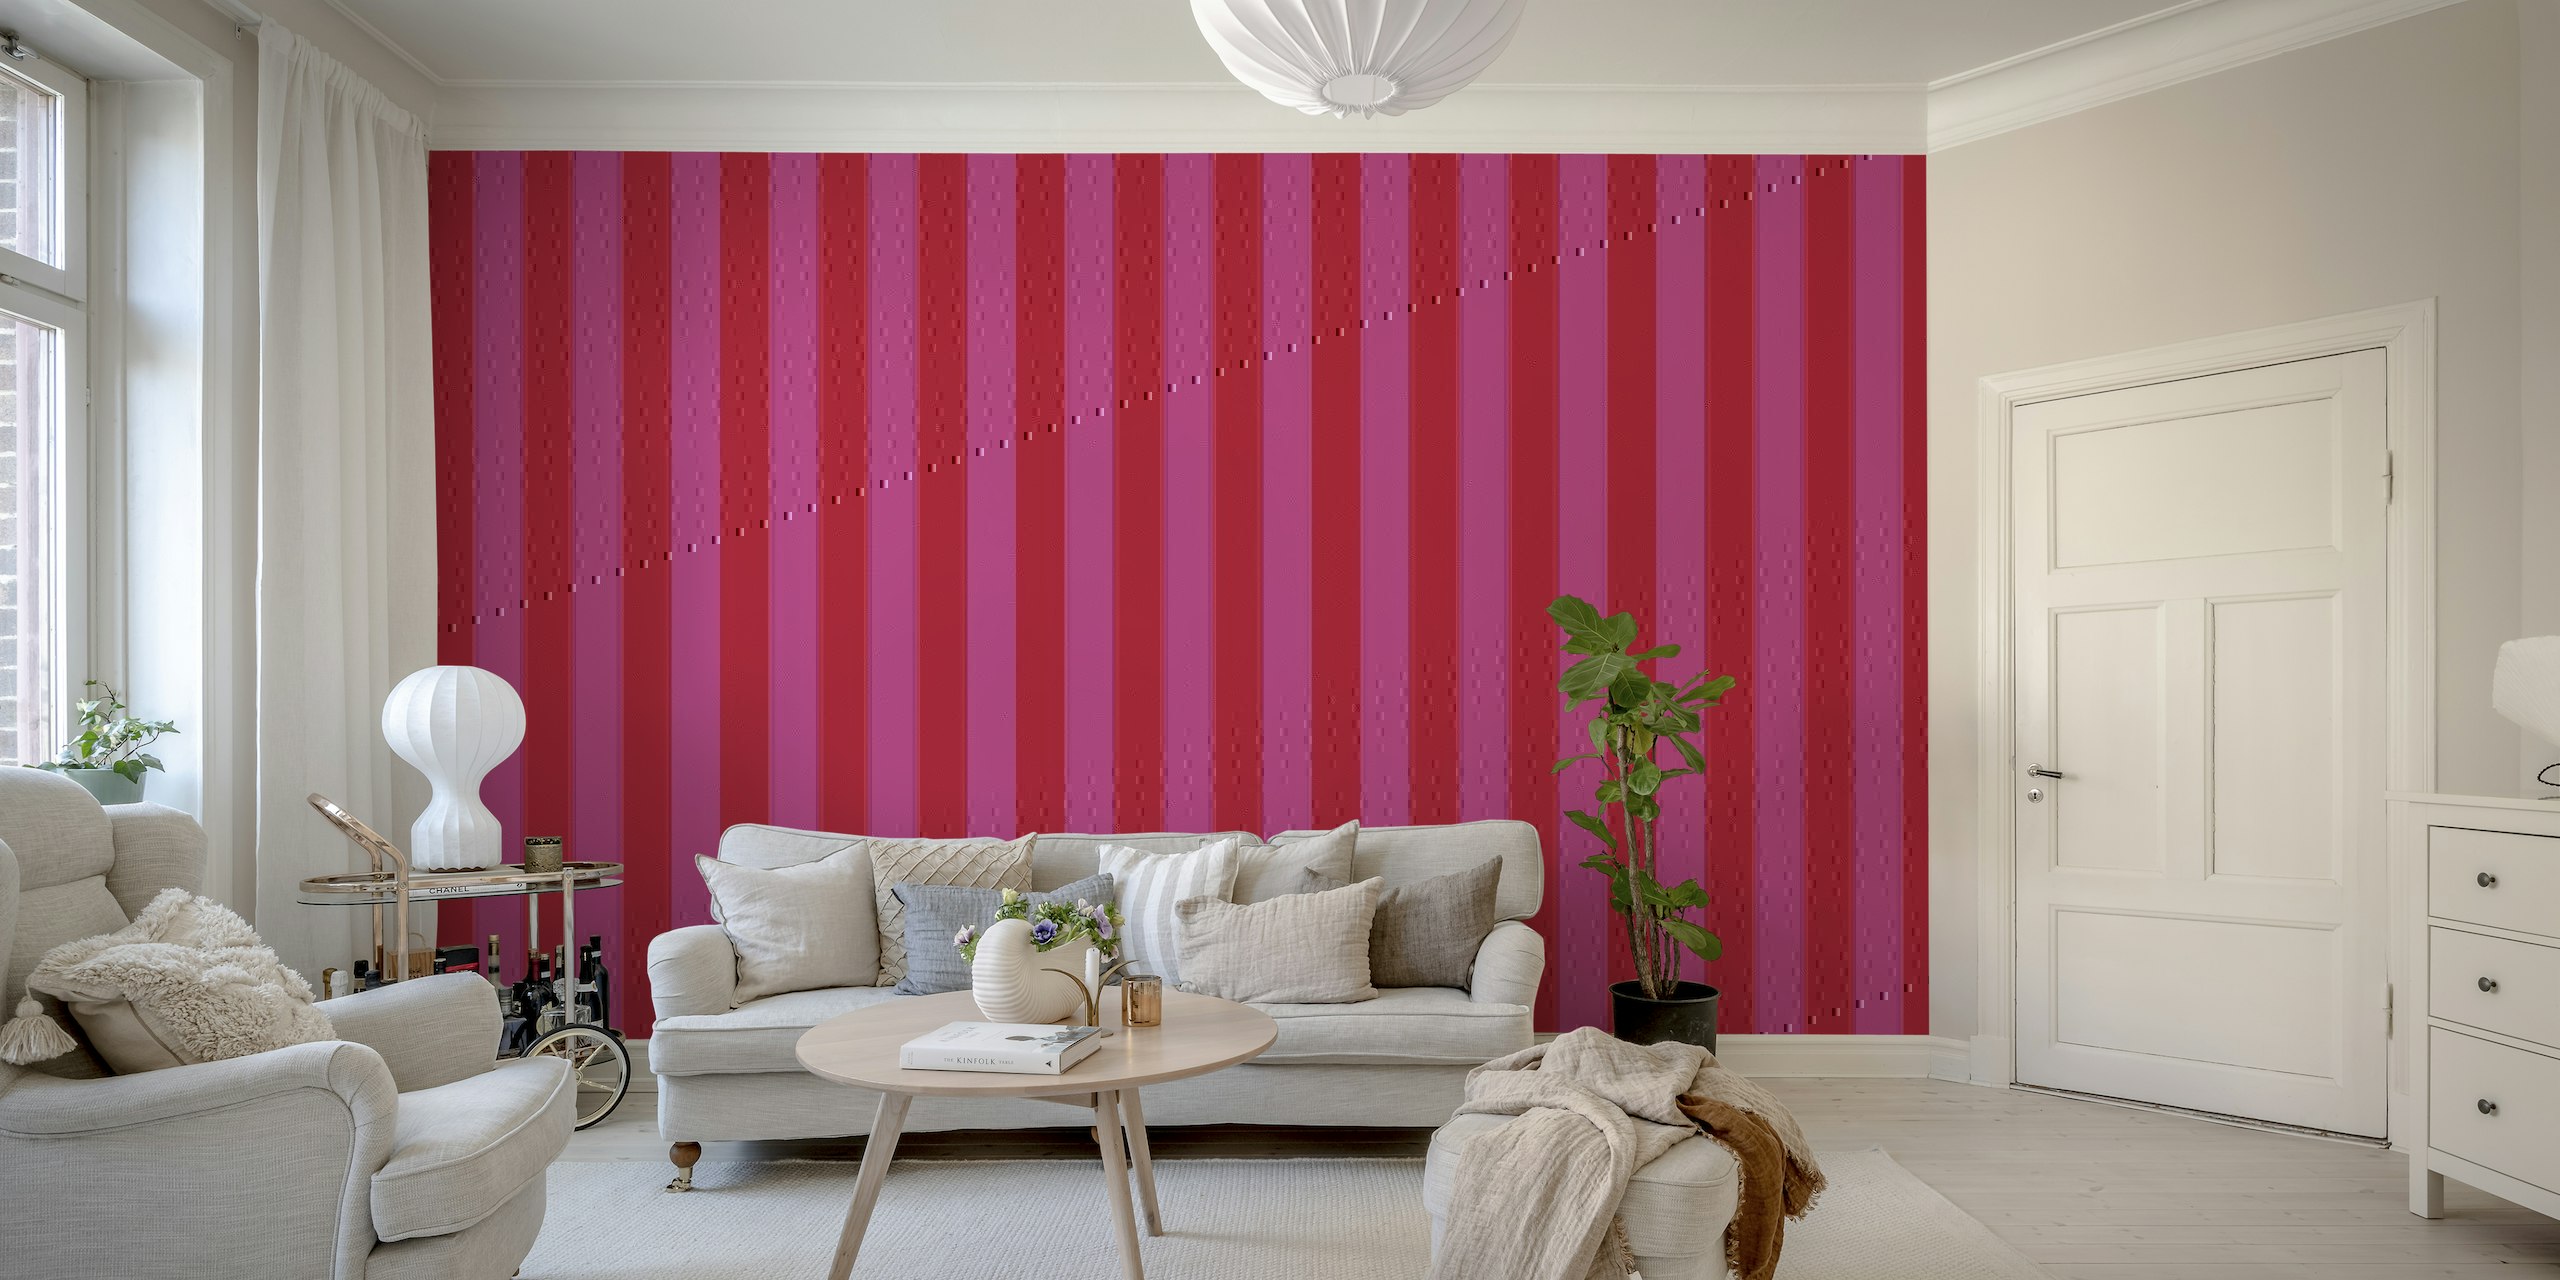 Pink and Red Stripe papel pintado